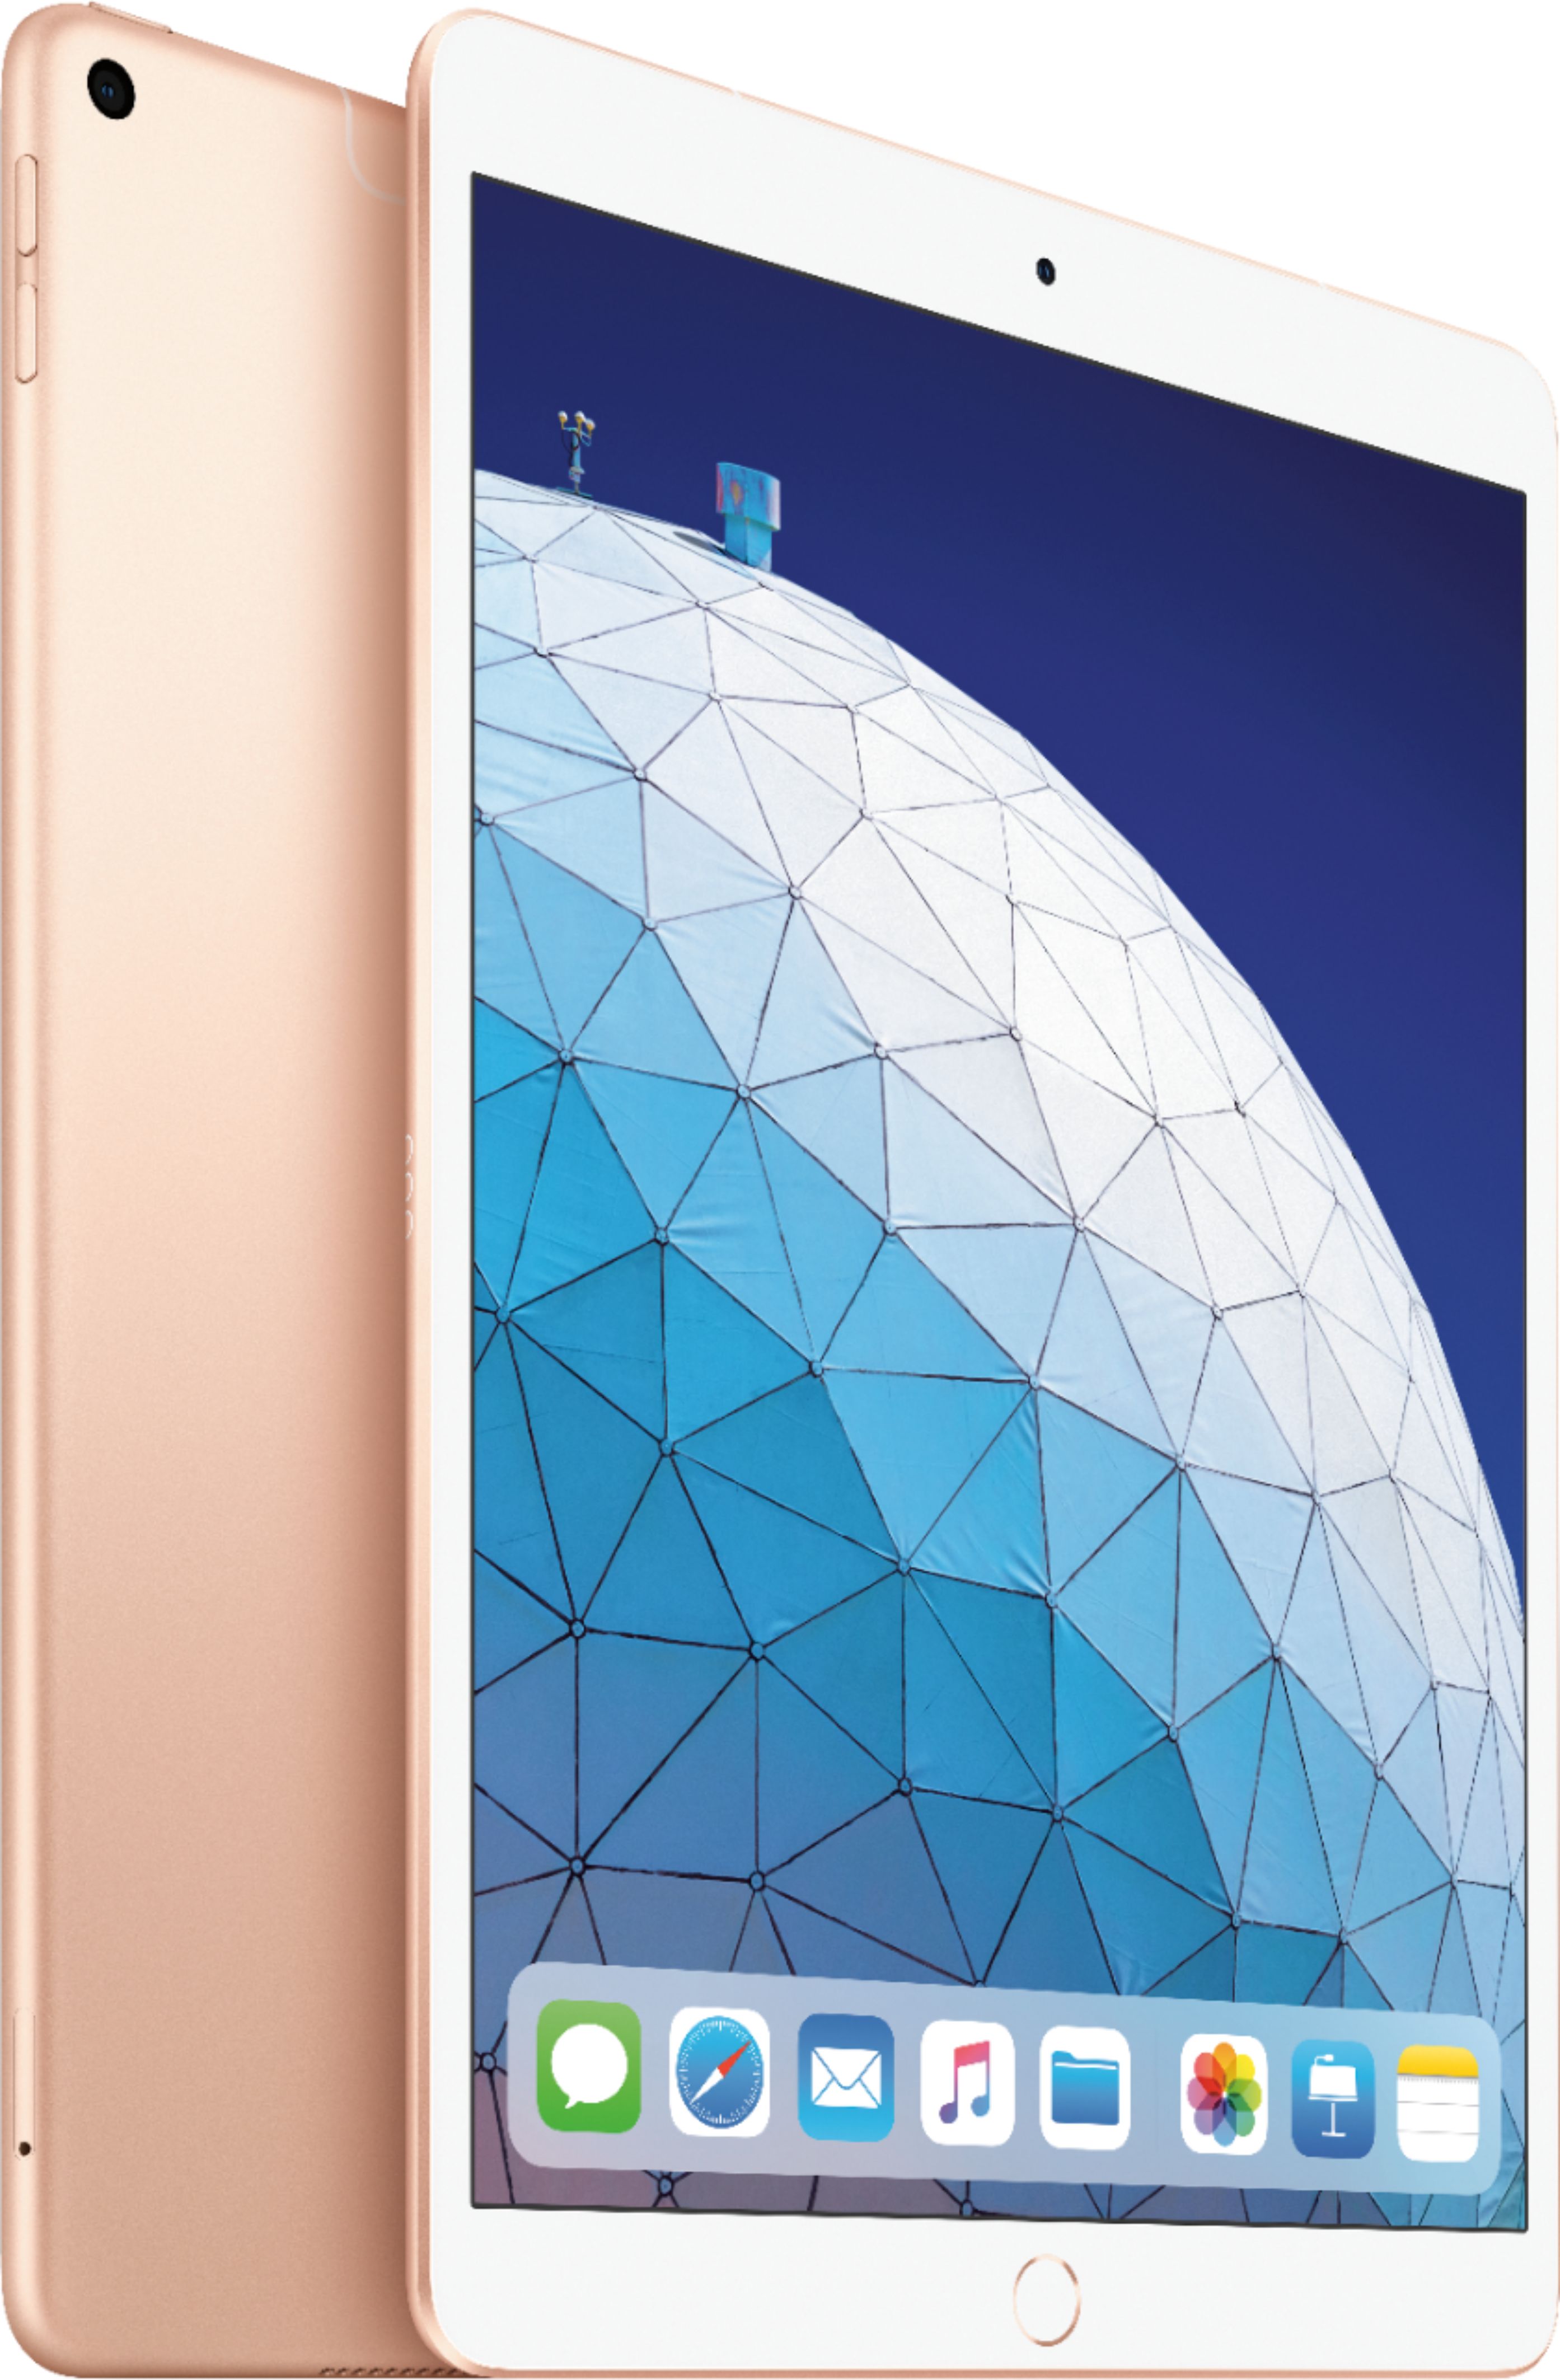 Apple iPad Air with Wi-Fi + Cellular 64GB Gold MV172LL/A - Best Buy